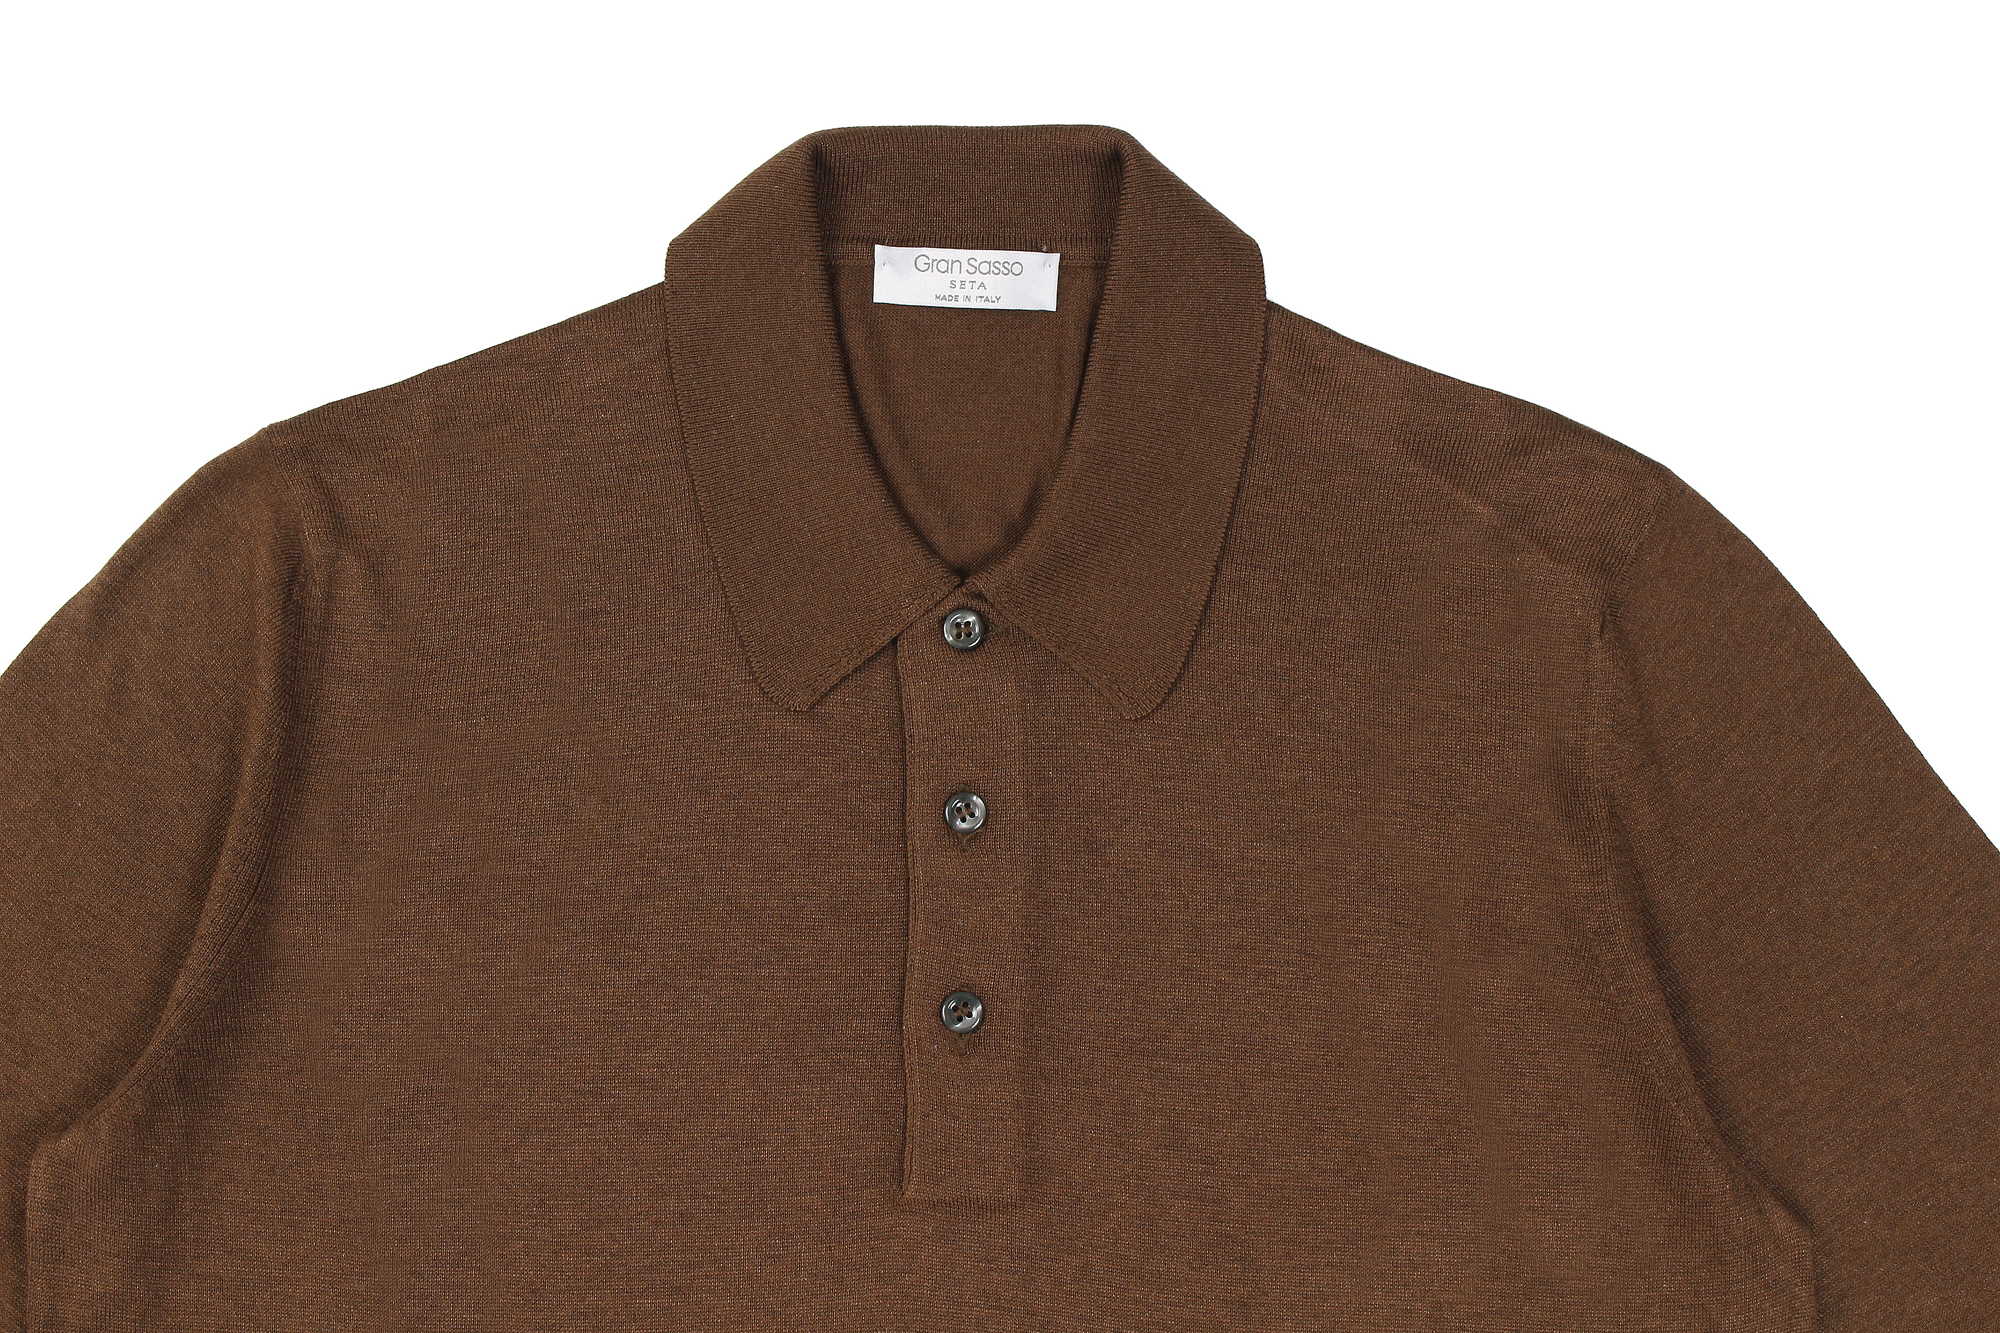 Gran Sasso (グランサッソ) Silk Knit Polo Shirt (シルクニットポロシャツ) SETA (シルク 100%) シルク ニット ポロシャツ GOLD (ゴールド・170) made in italy (イタリア製) 2020 春夏新作 【入荷しました】【フリー分発売開始】 愛知 名古屋 altoediritto アルトエデリット 